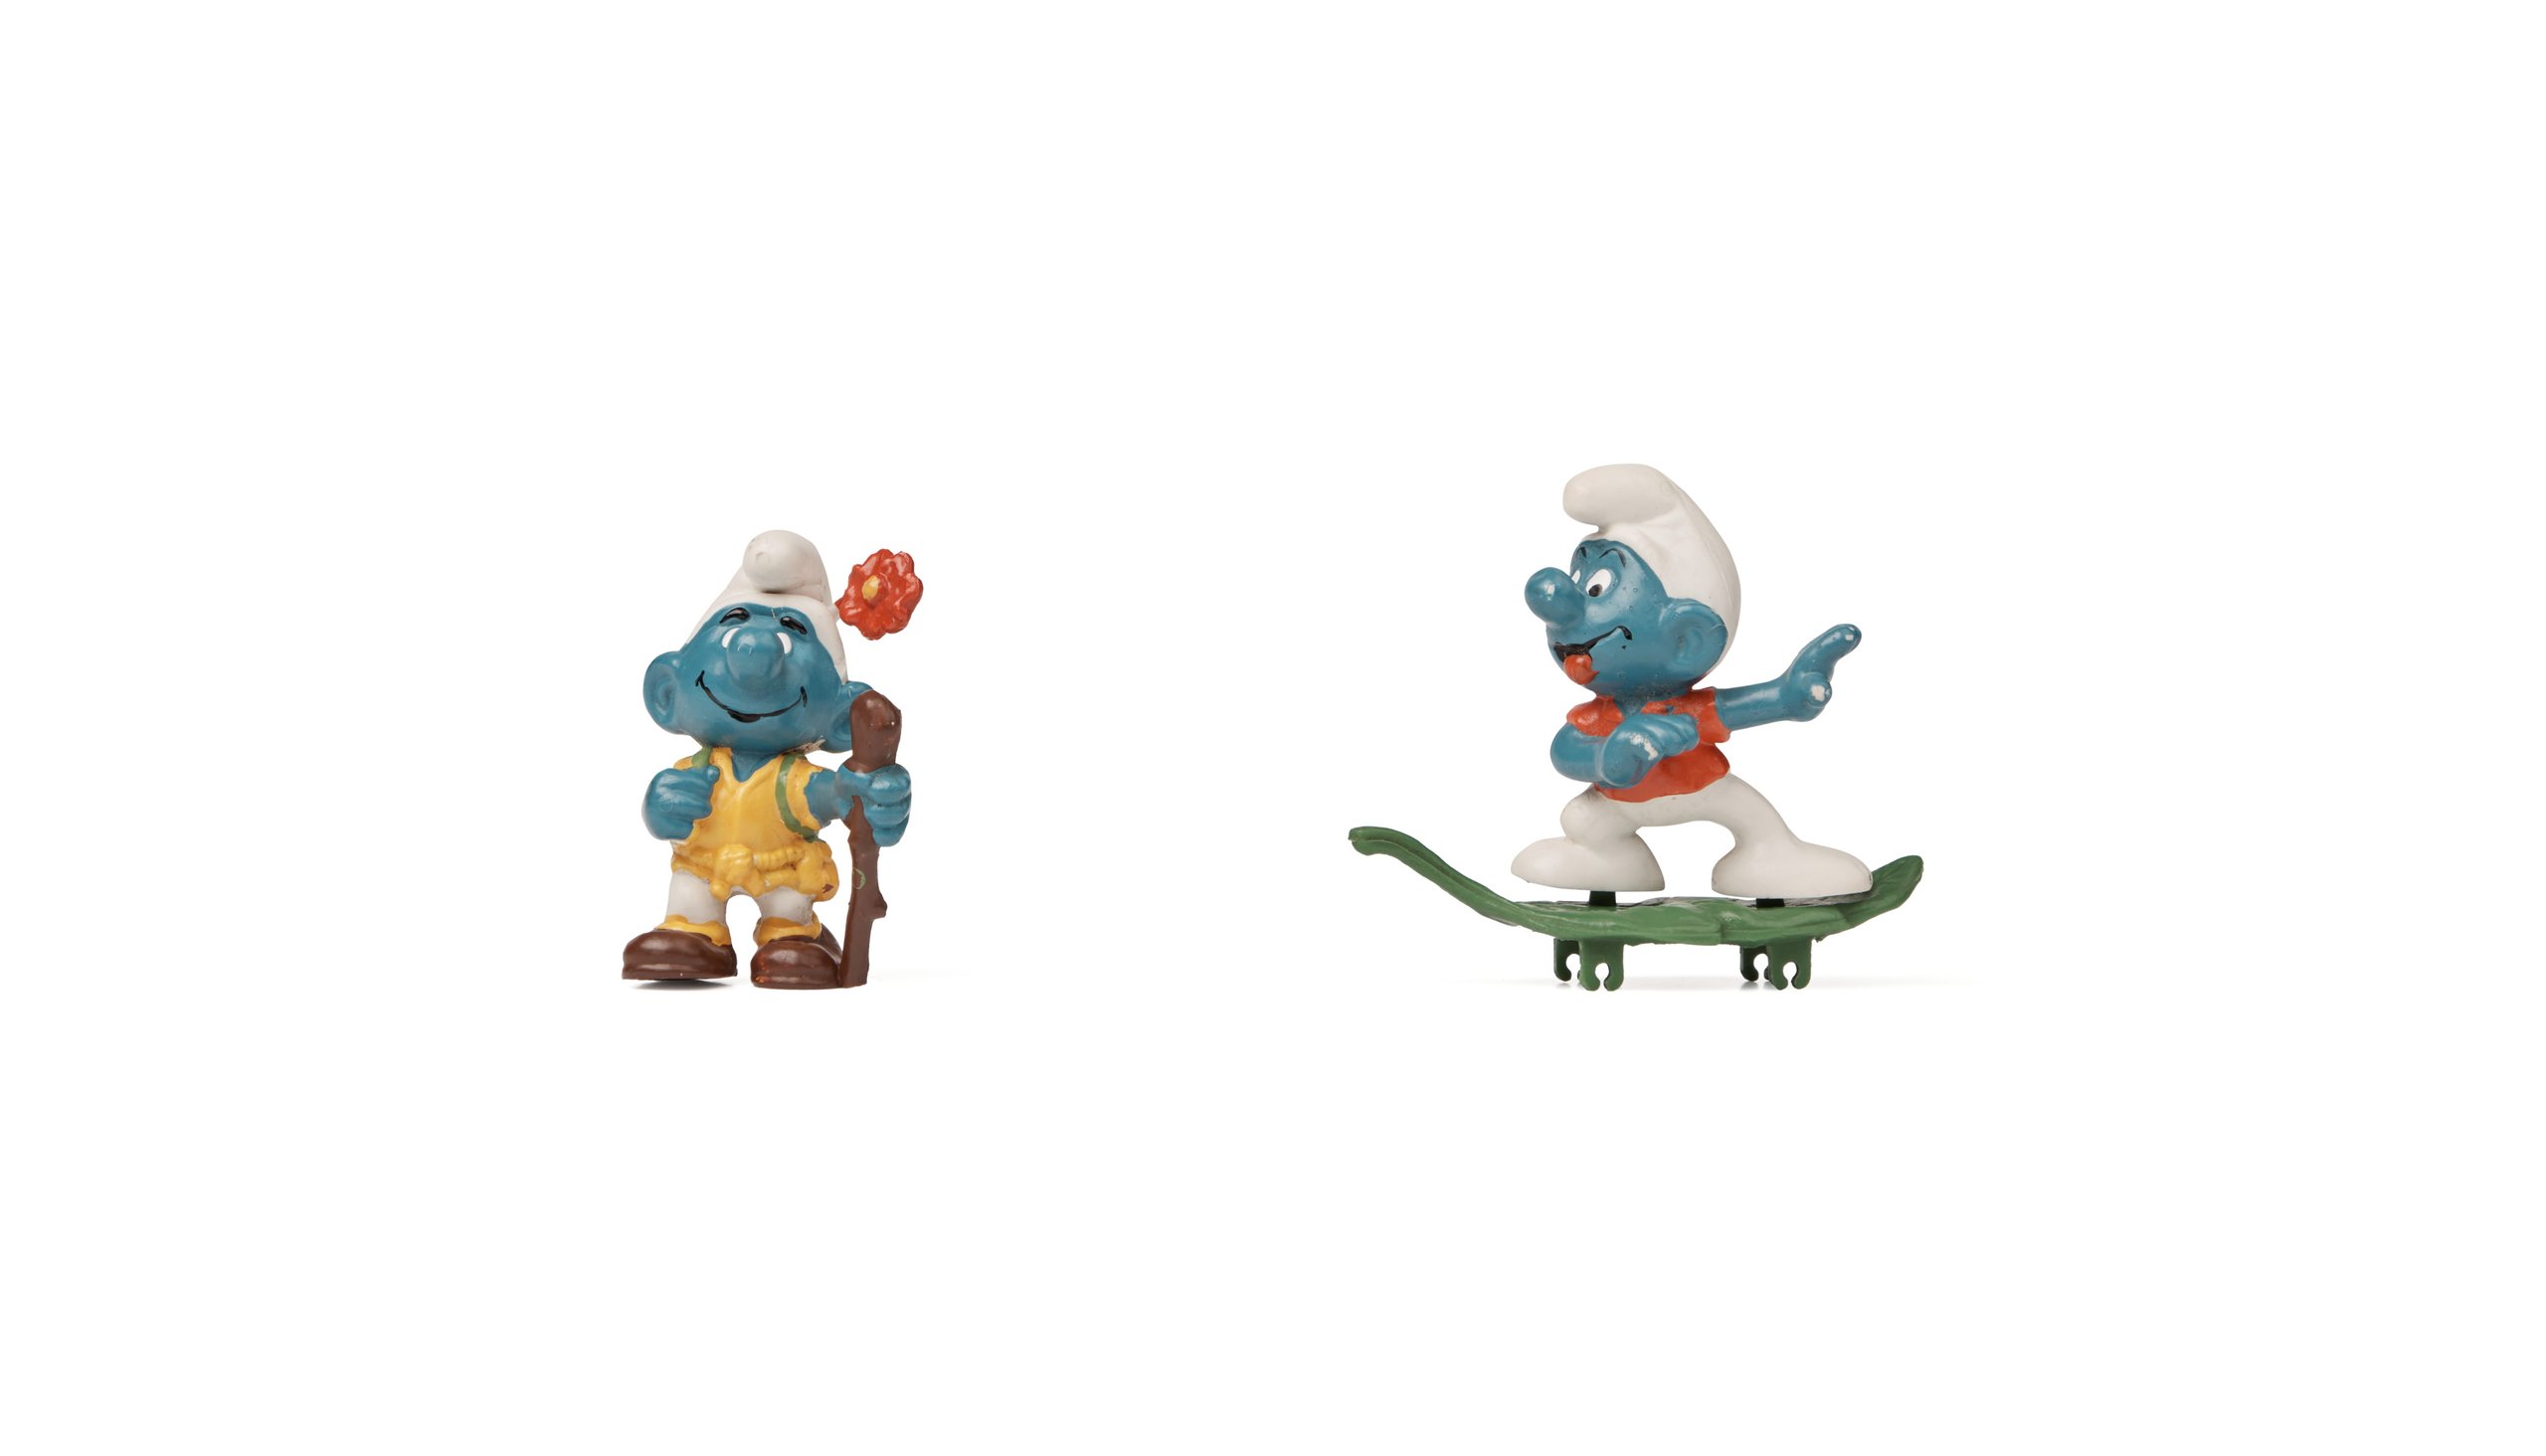 Smurf figures